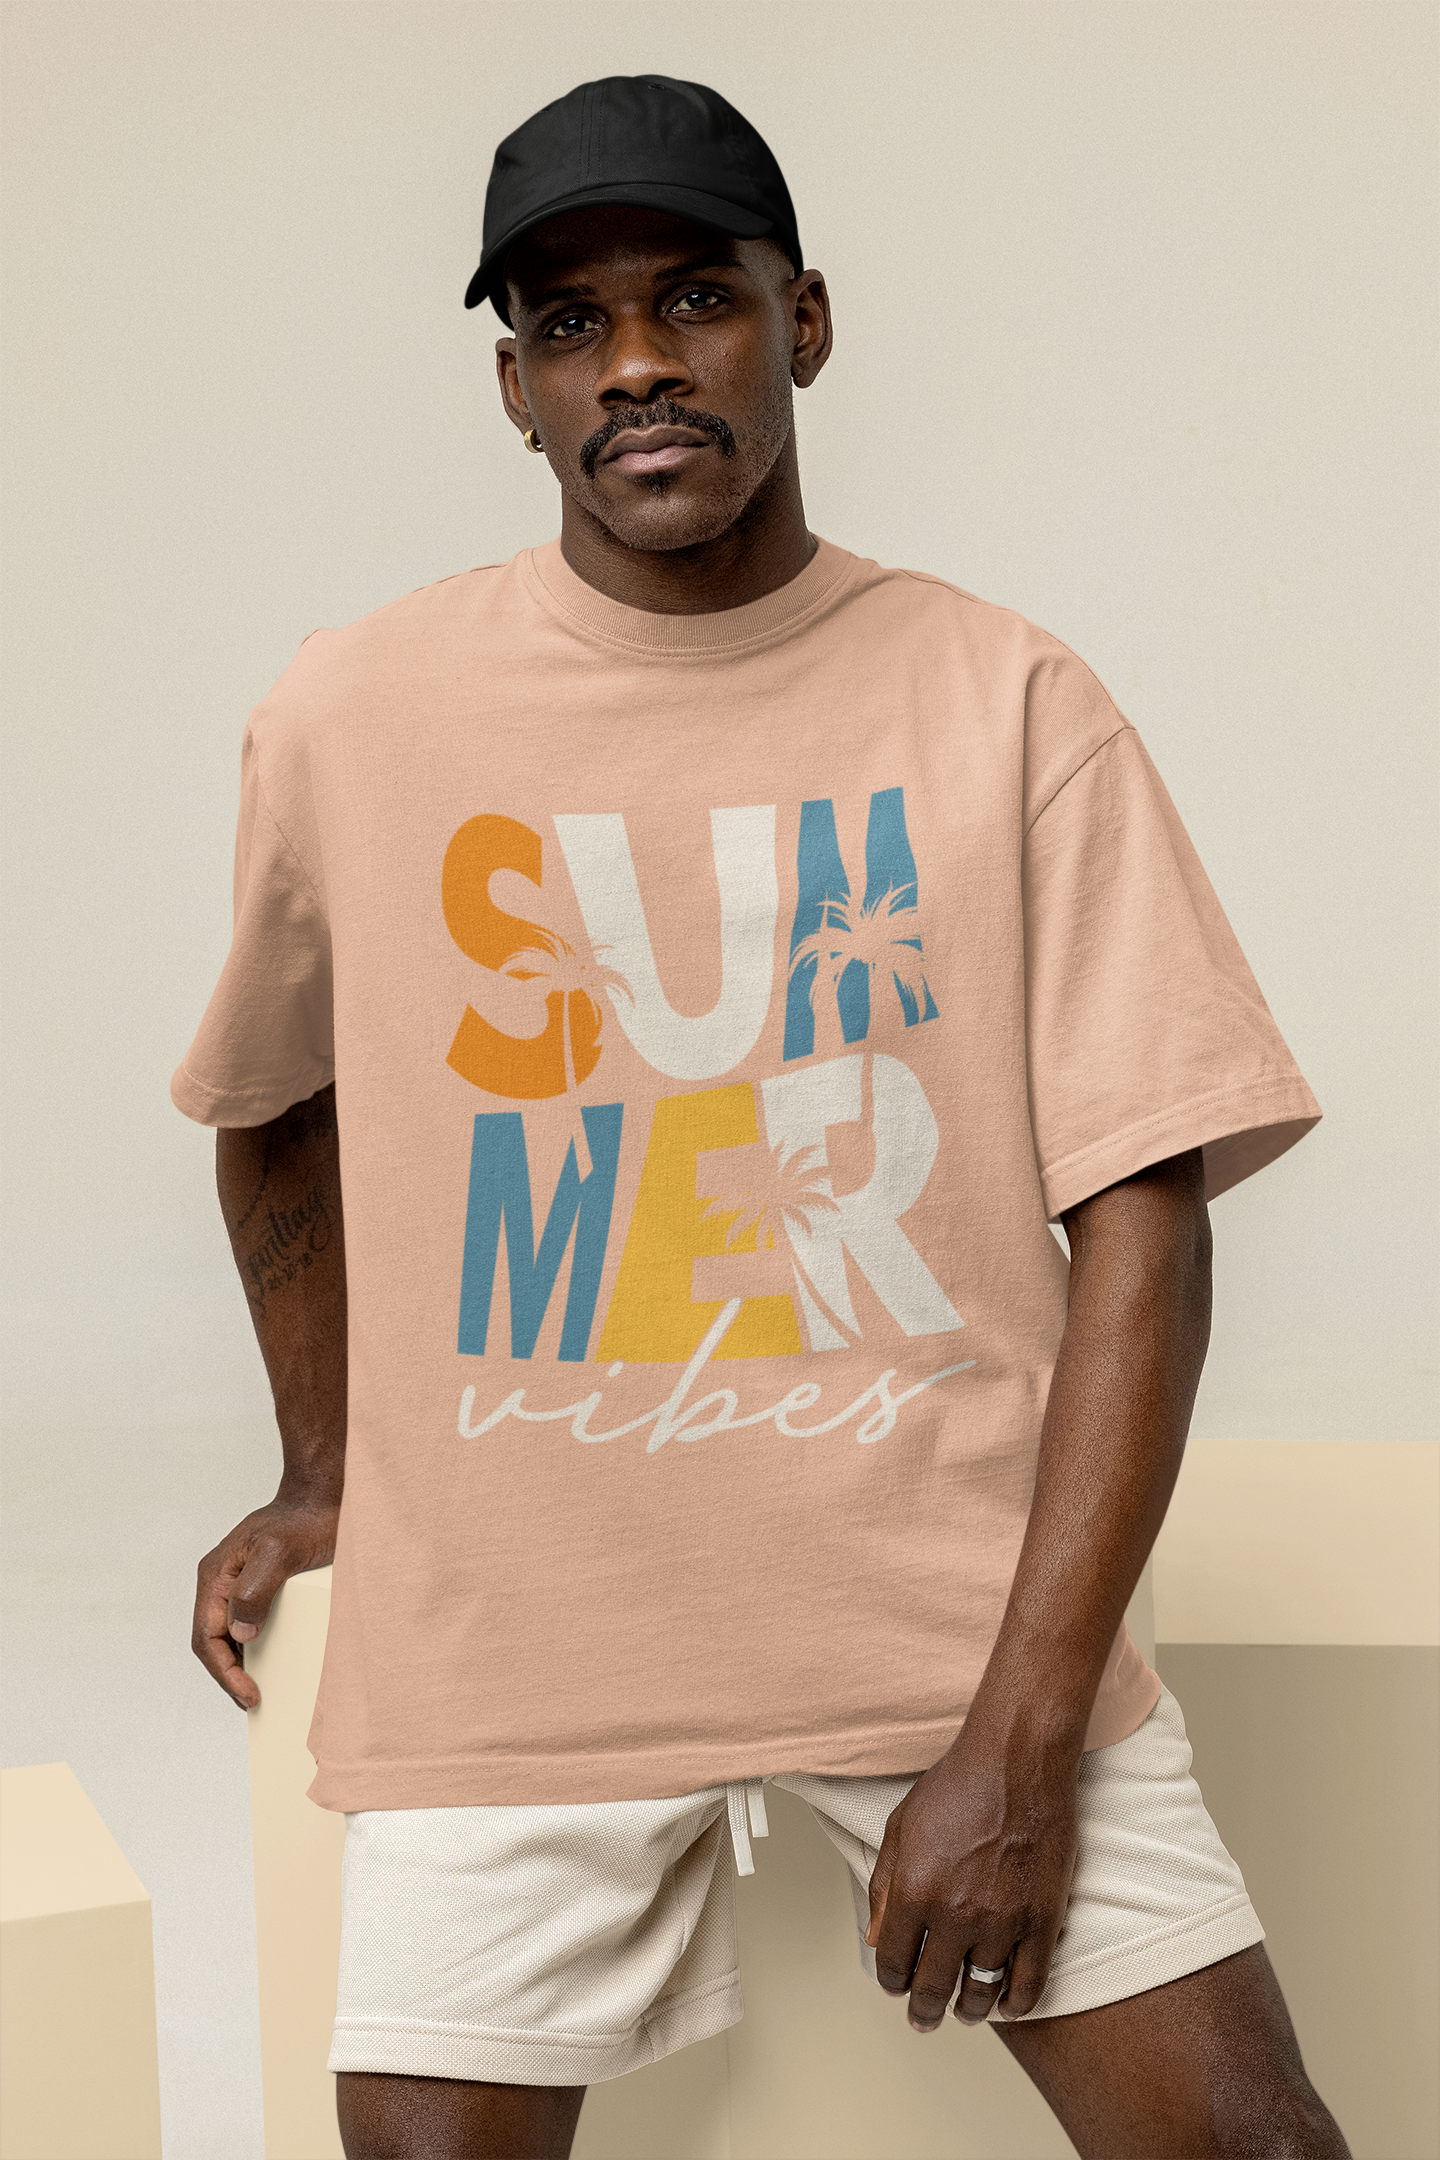 "Summer" Vintage Shirt